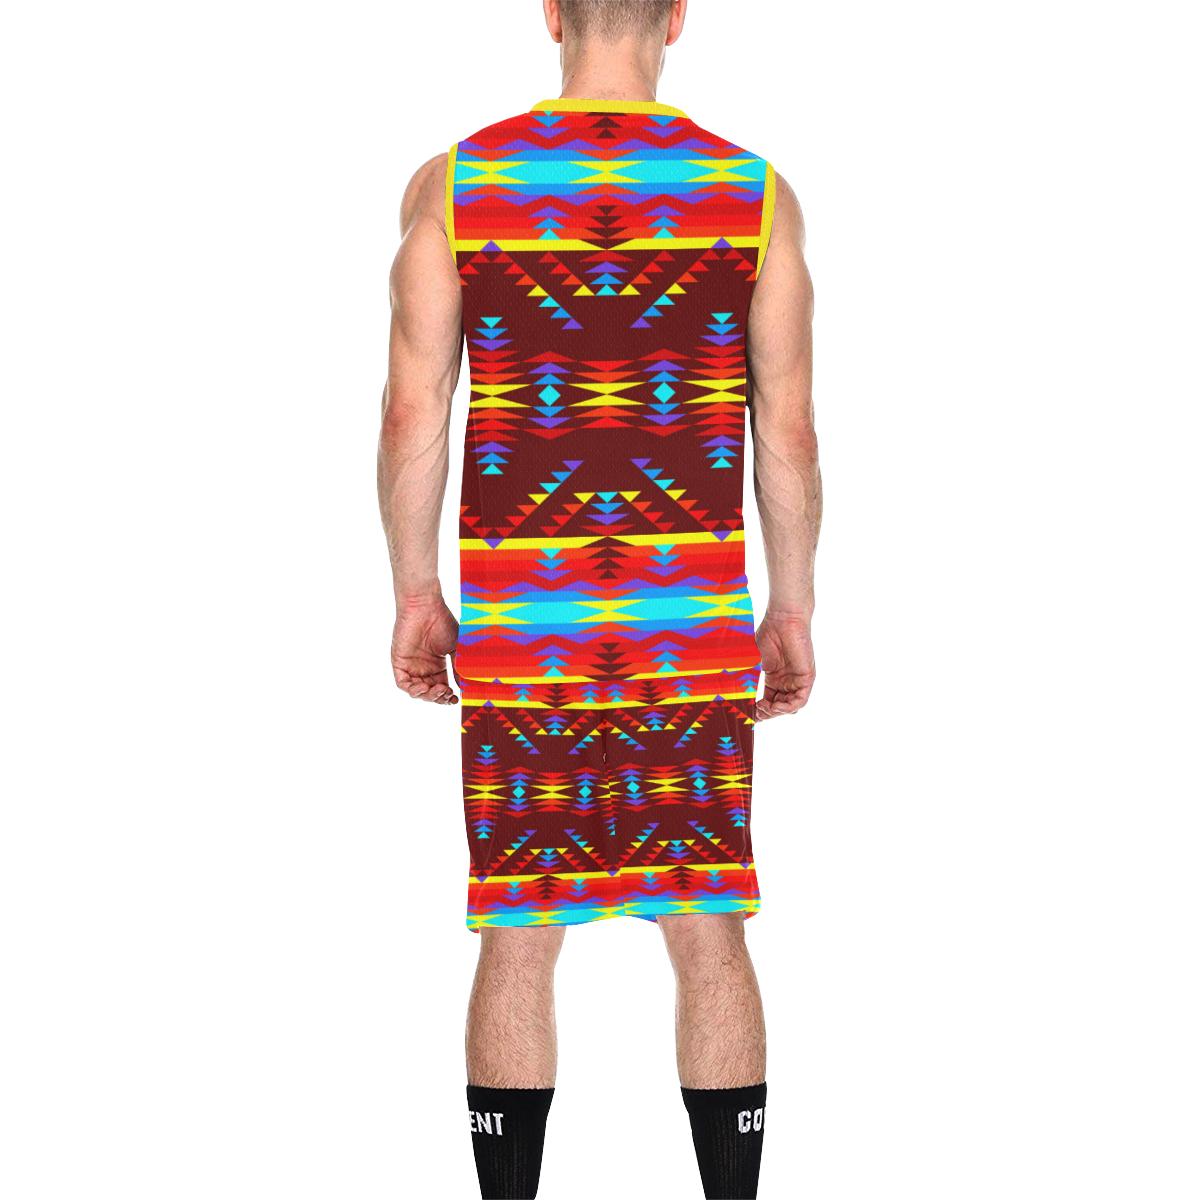 Visions of Lasting Peace All Over Print Basketball Uniform Basketball Uniform e-joyer 